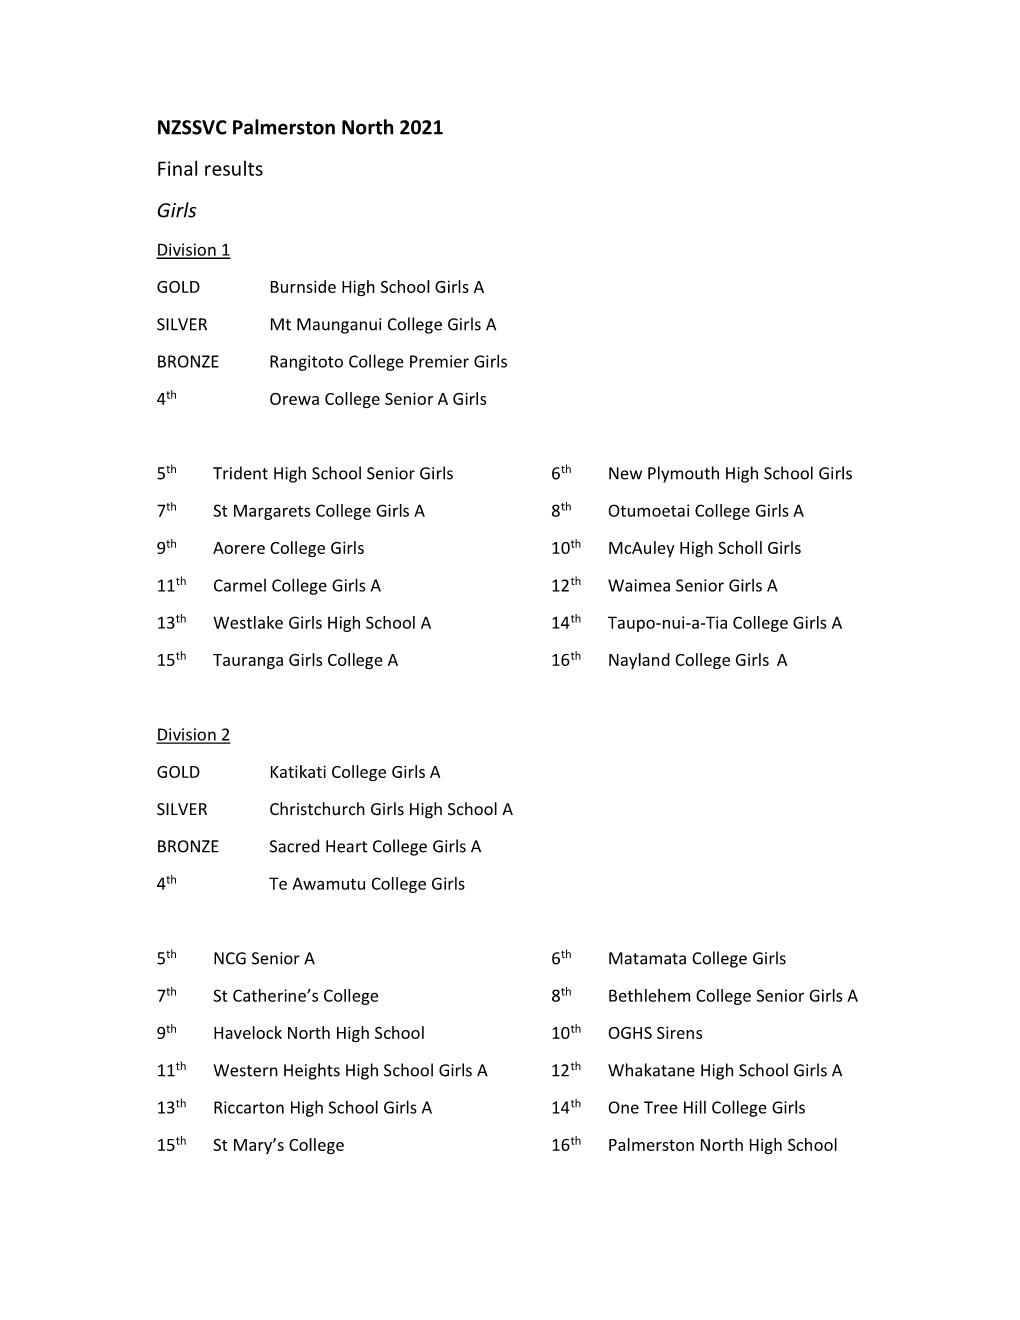 NZSSVC Palmerston North 2021 Final Results Girls